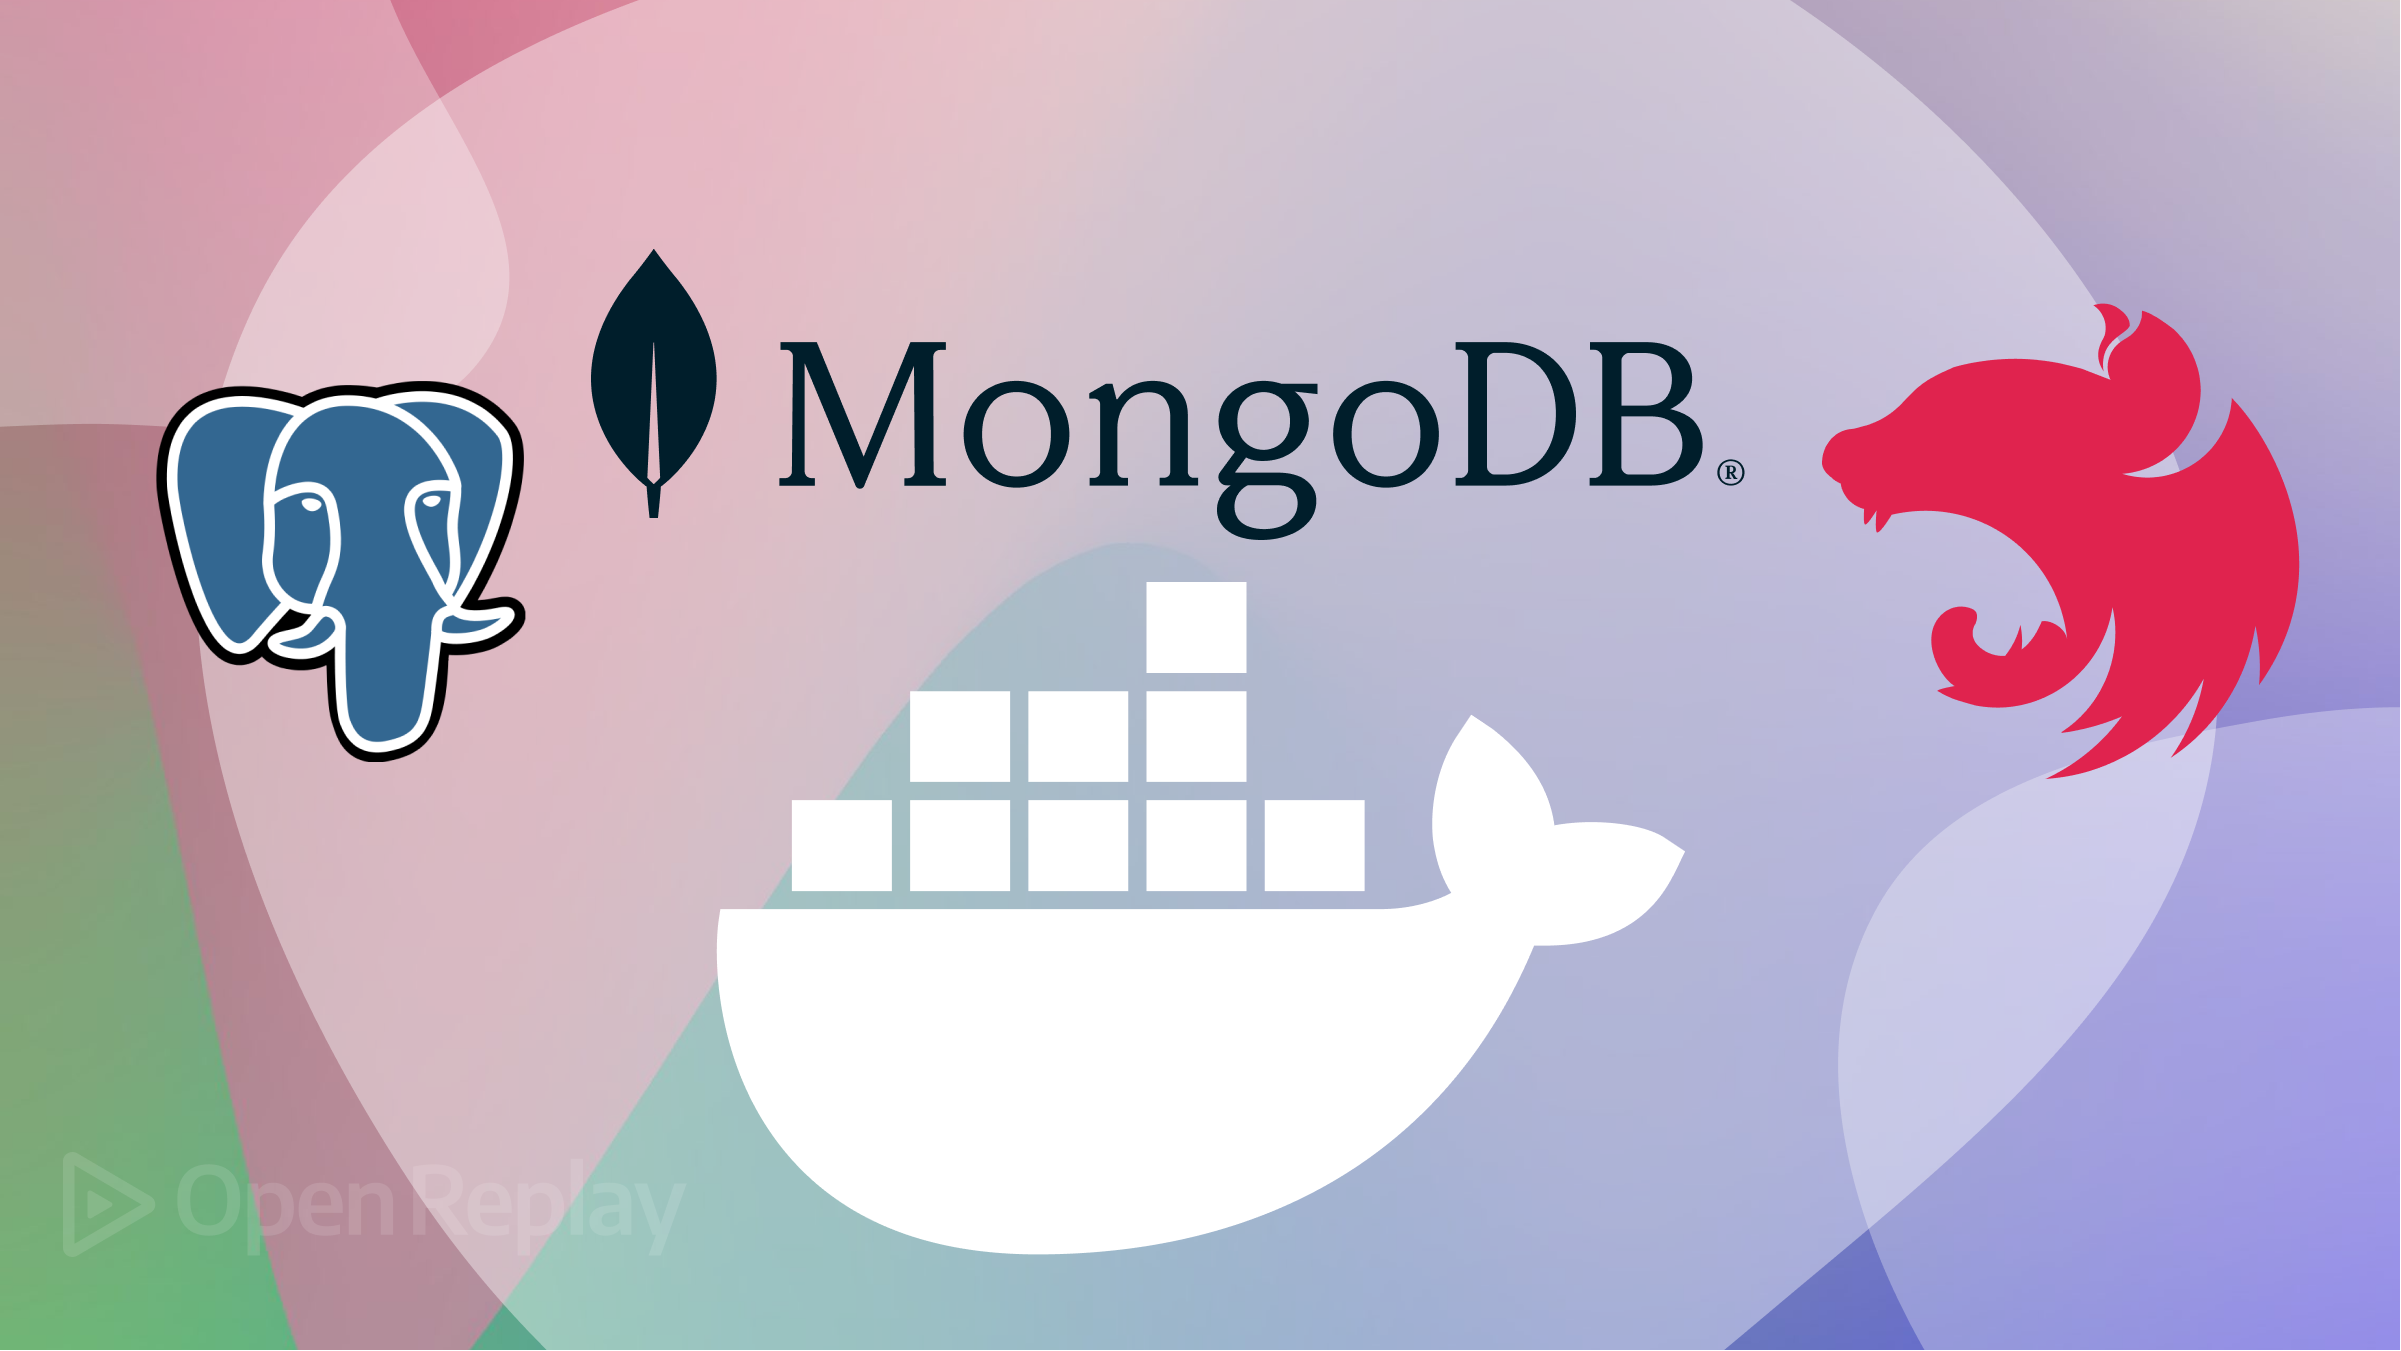 Running PostgreSQL, MongoDB, and NestJS concurrently with Docker Compose